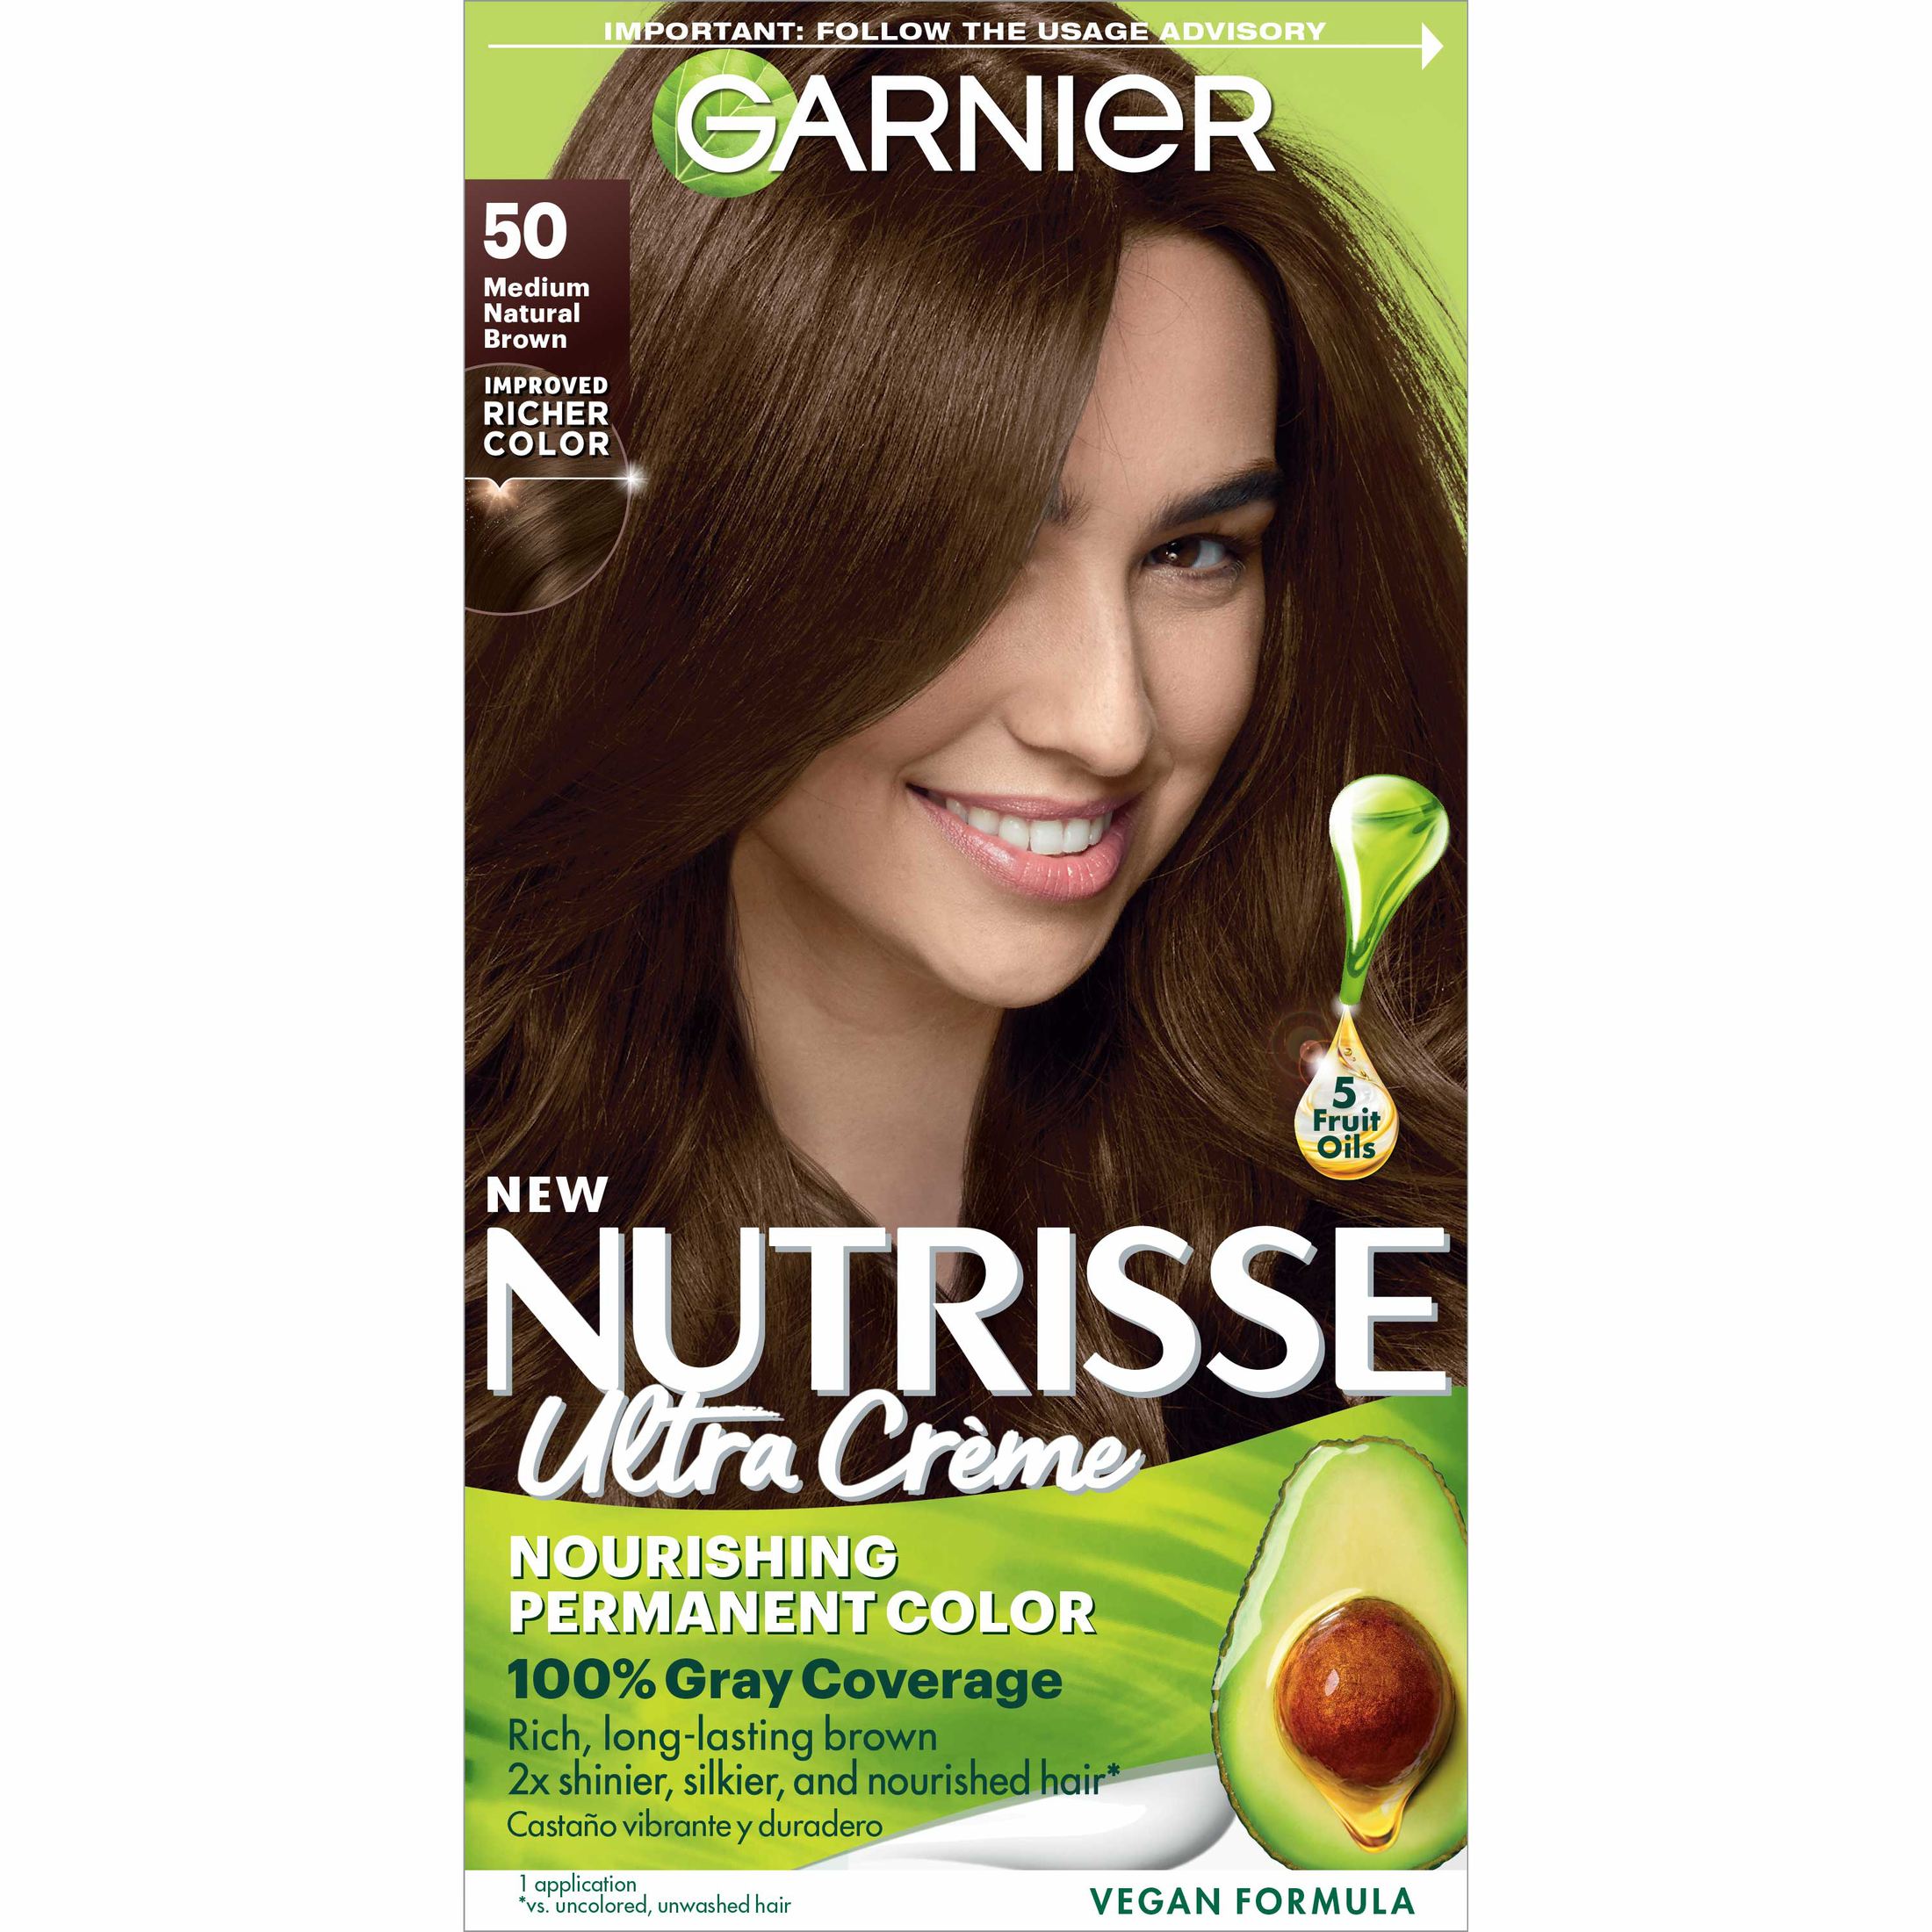 Garnier Nutrisse Nourishing Hair Color Creme, 050 Medium Natural Brown Truffle - image 1 of 11